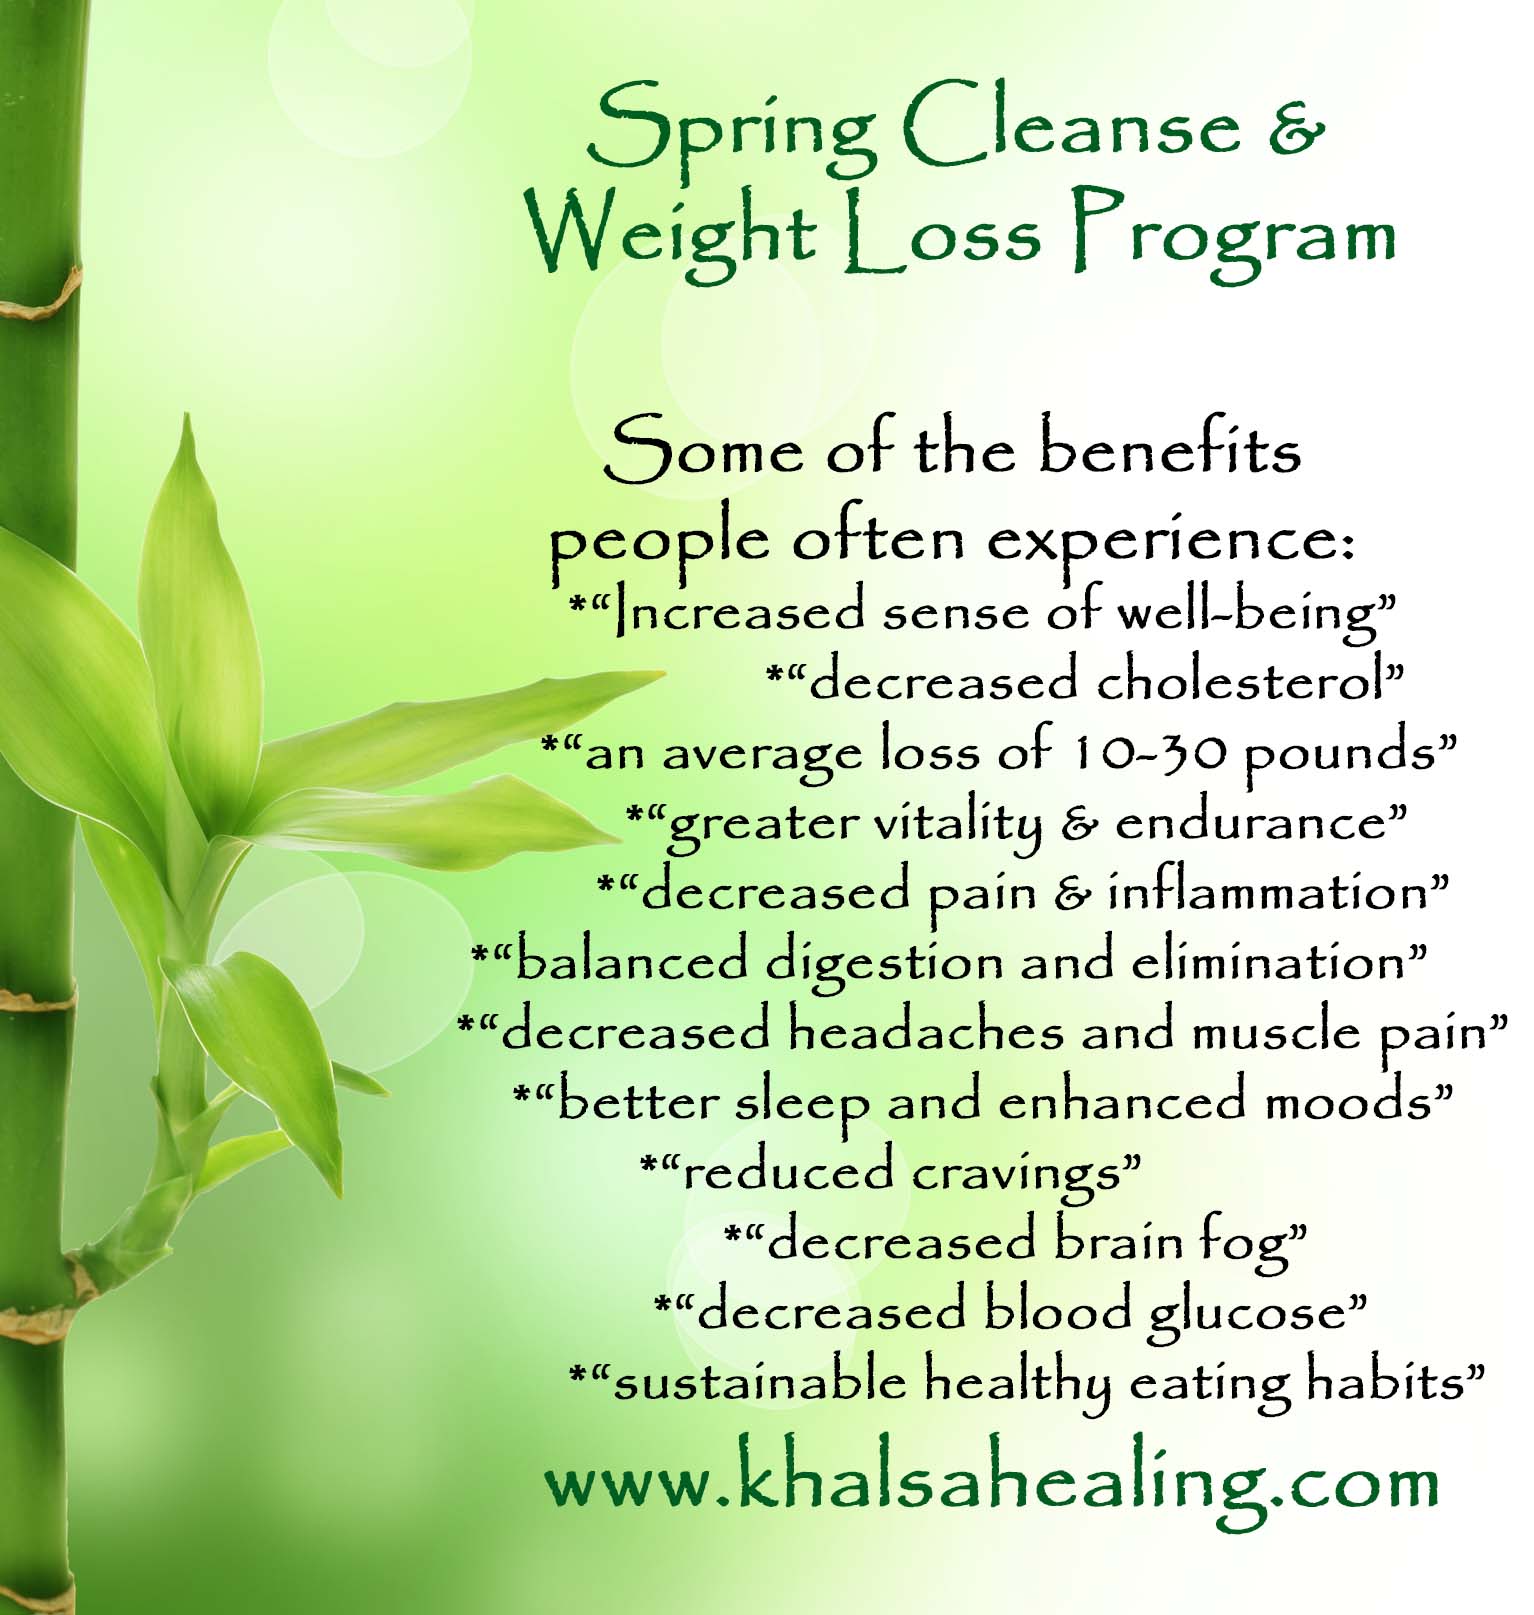 Khalsa Spring Cleanse Benefits